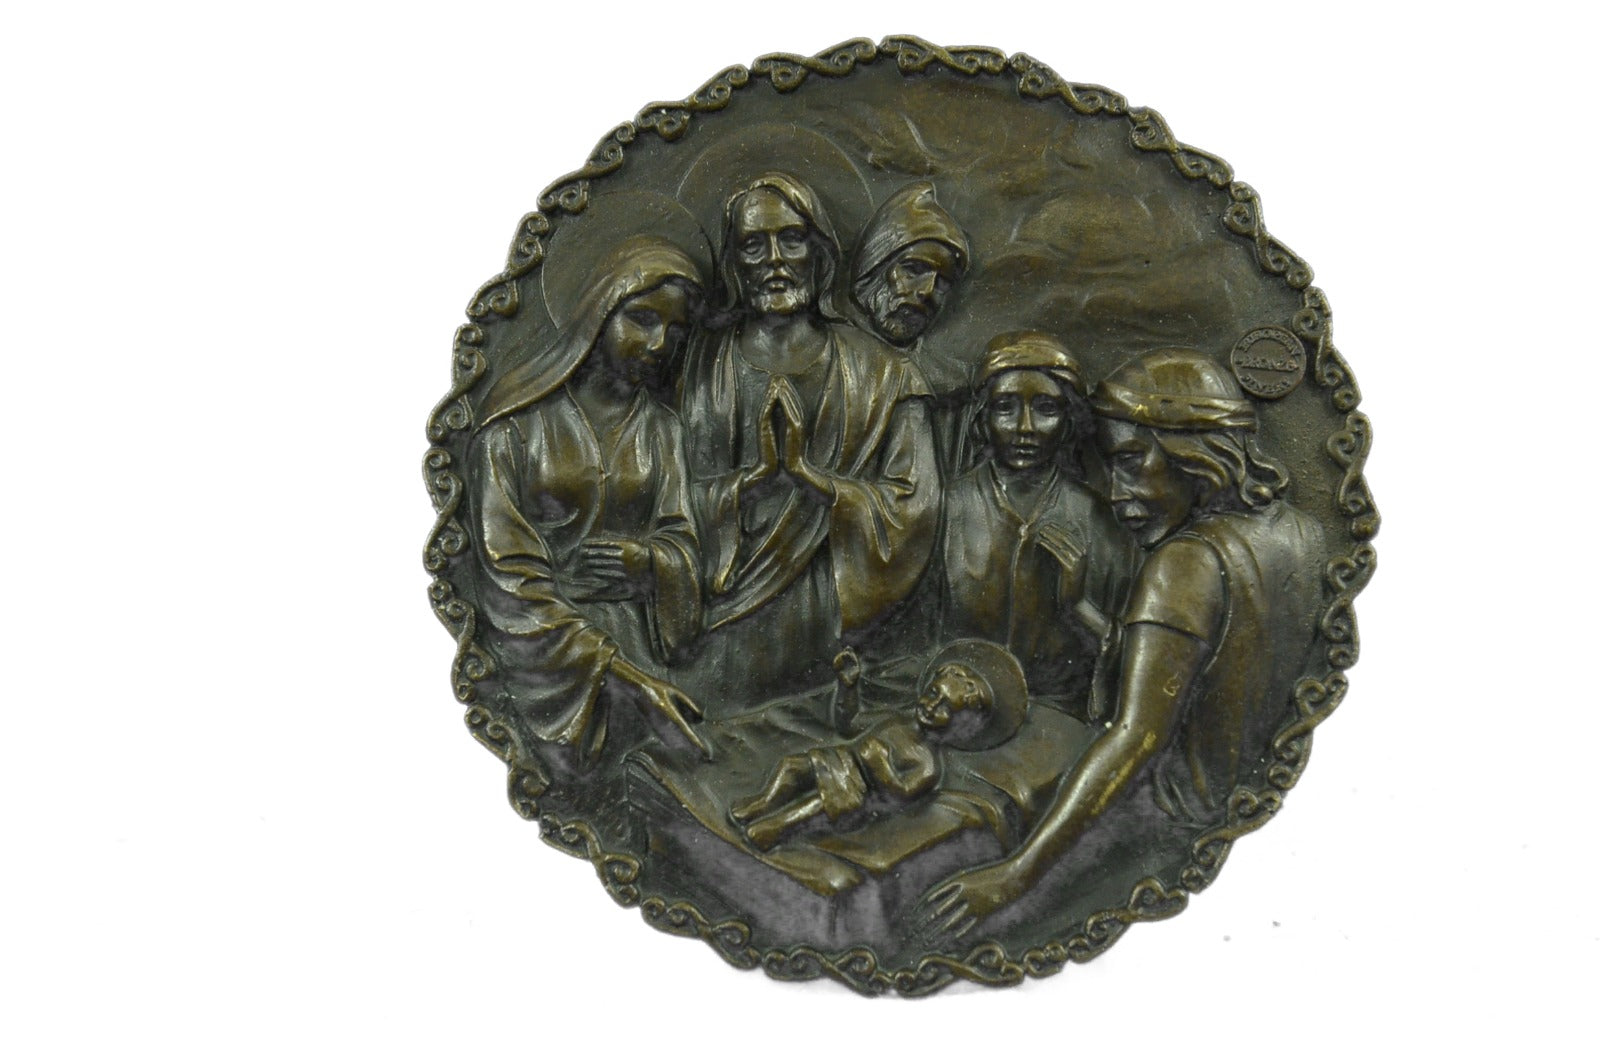 Handcrafted bronze sculpture SALE Jesus Cast Hot Style Modern Nativity Genesis